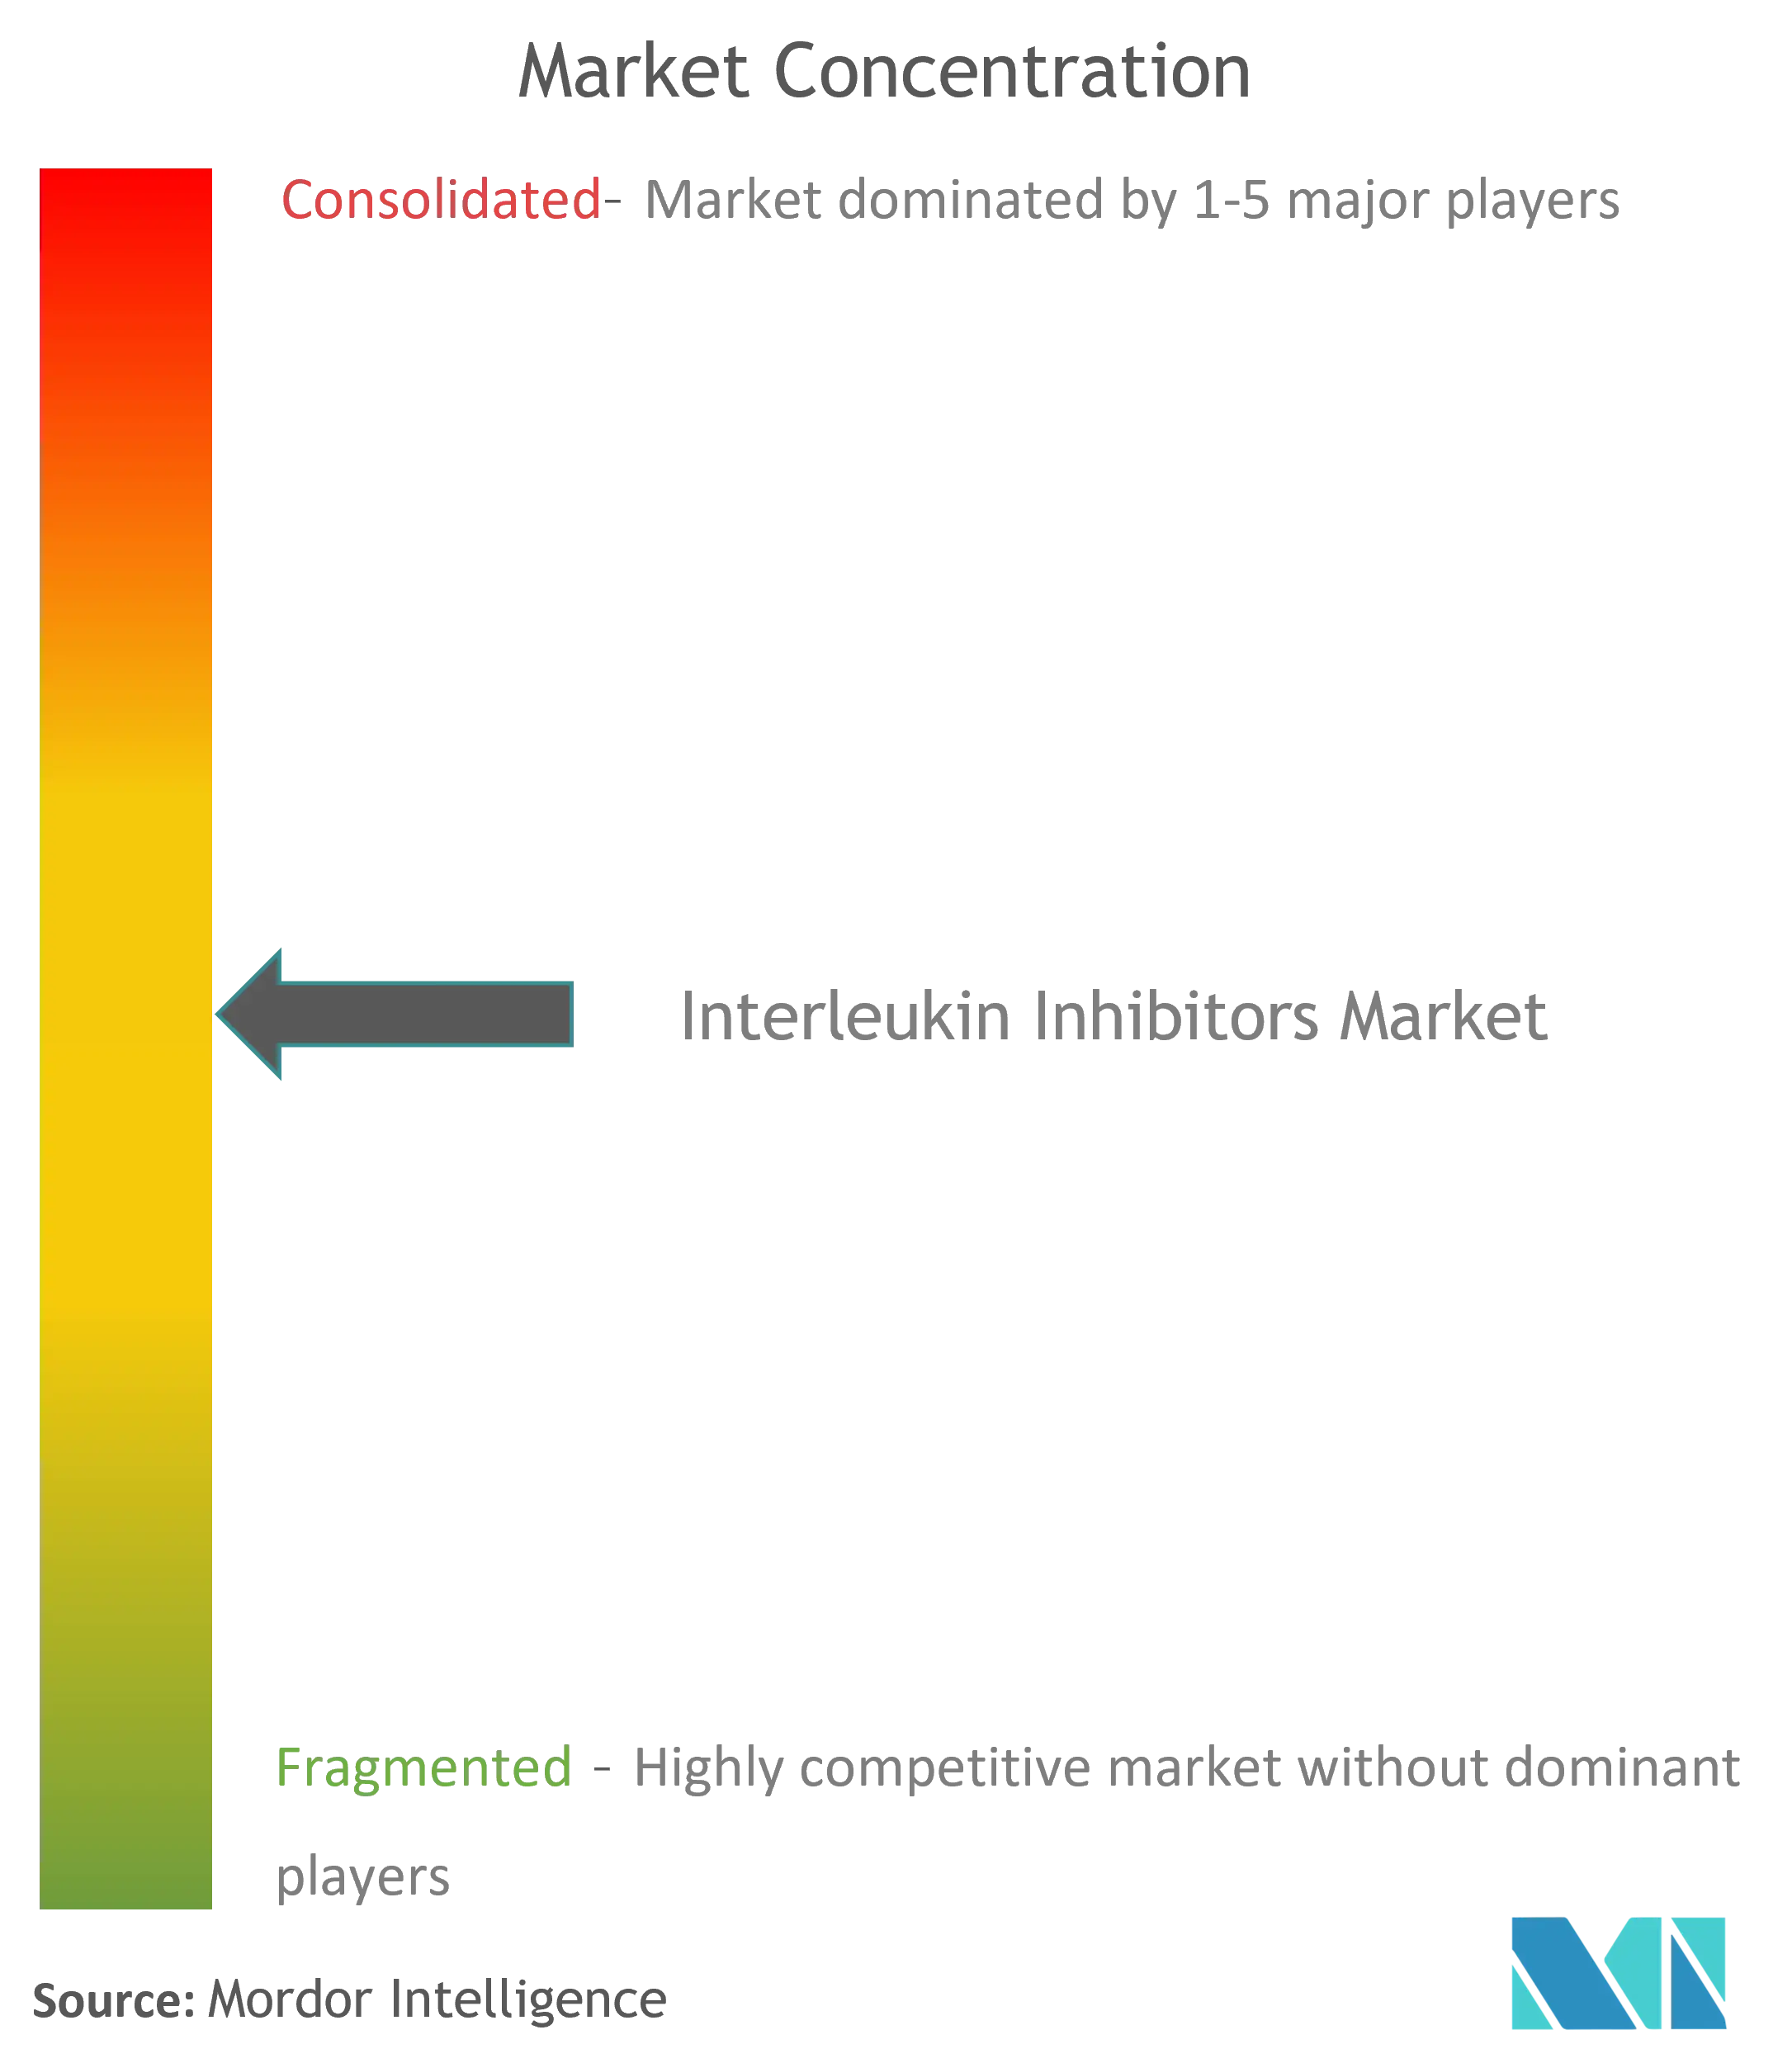 Global Interleukin Inhibitors Market Concentration